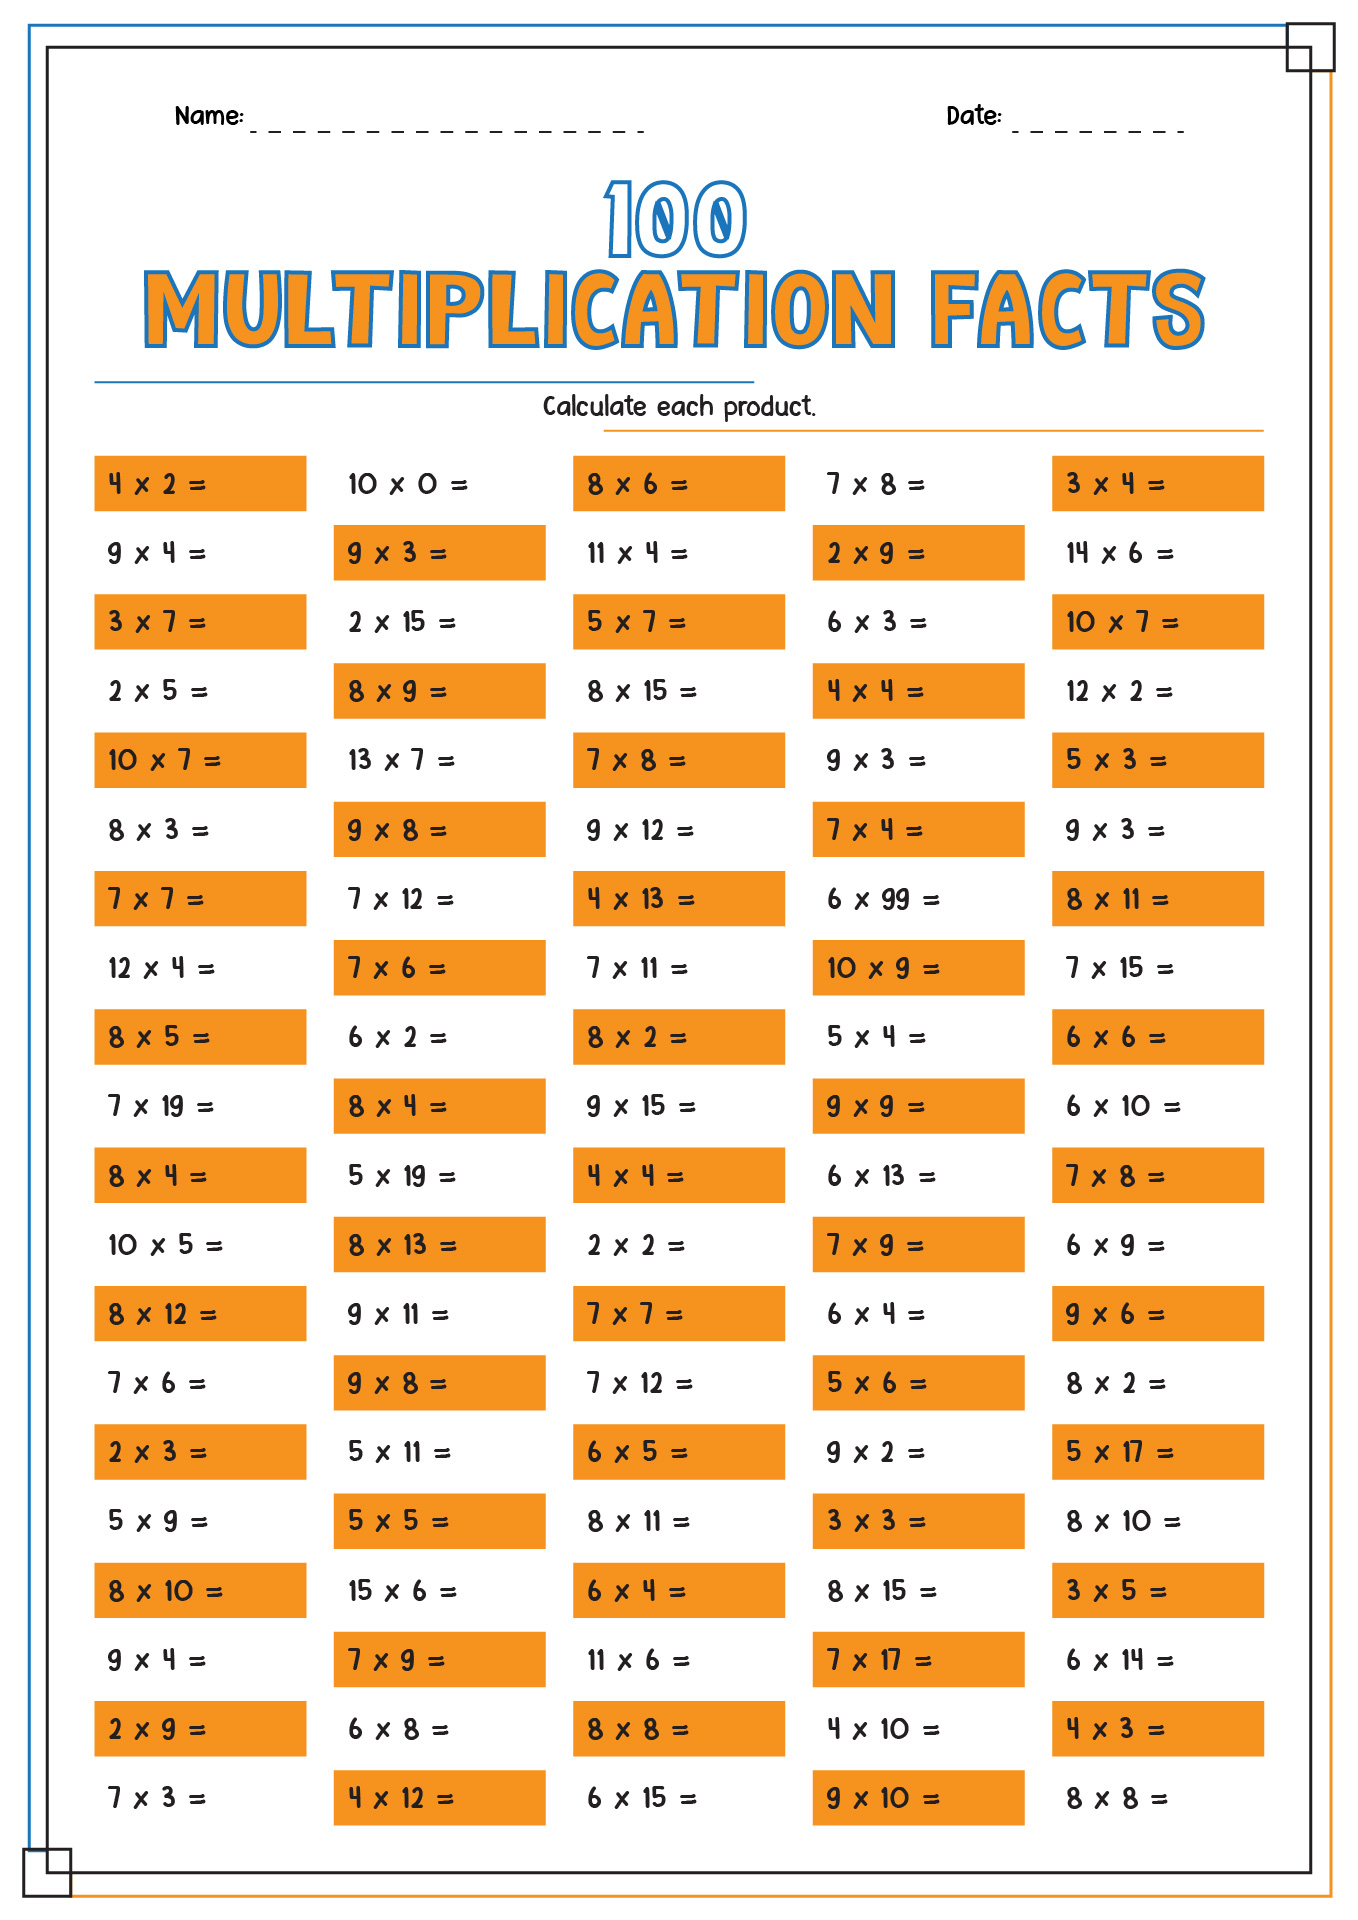 Multiplication Worksheet 100 Facts